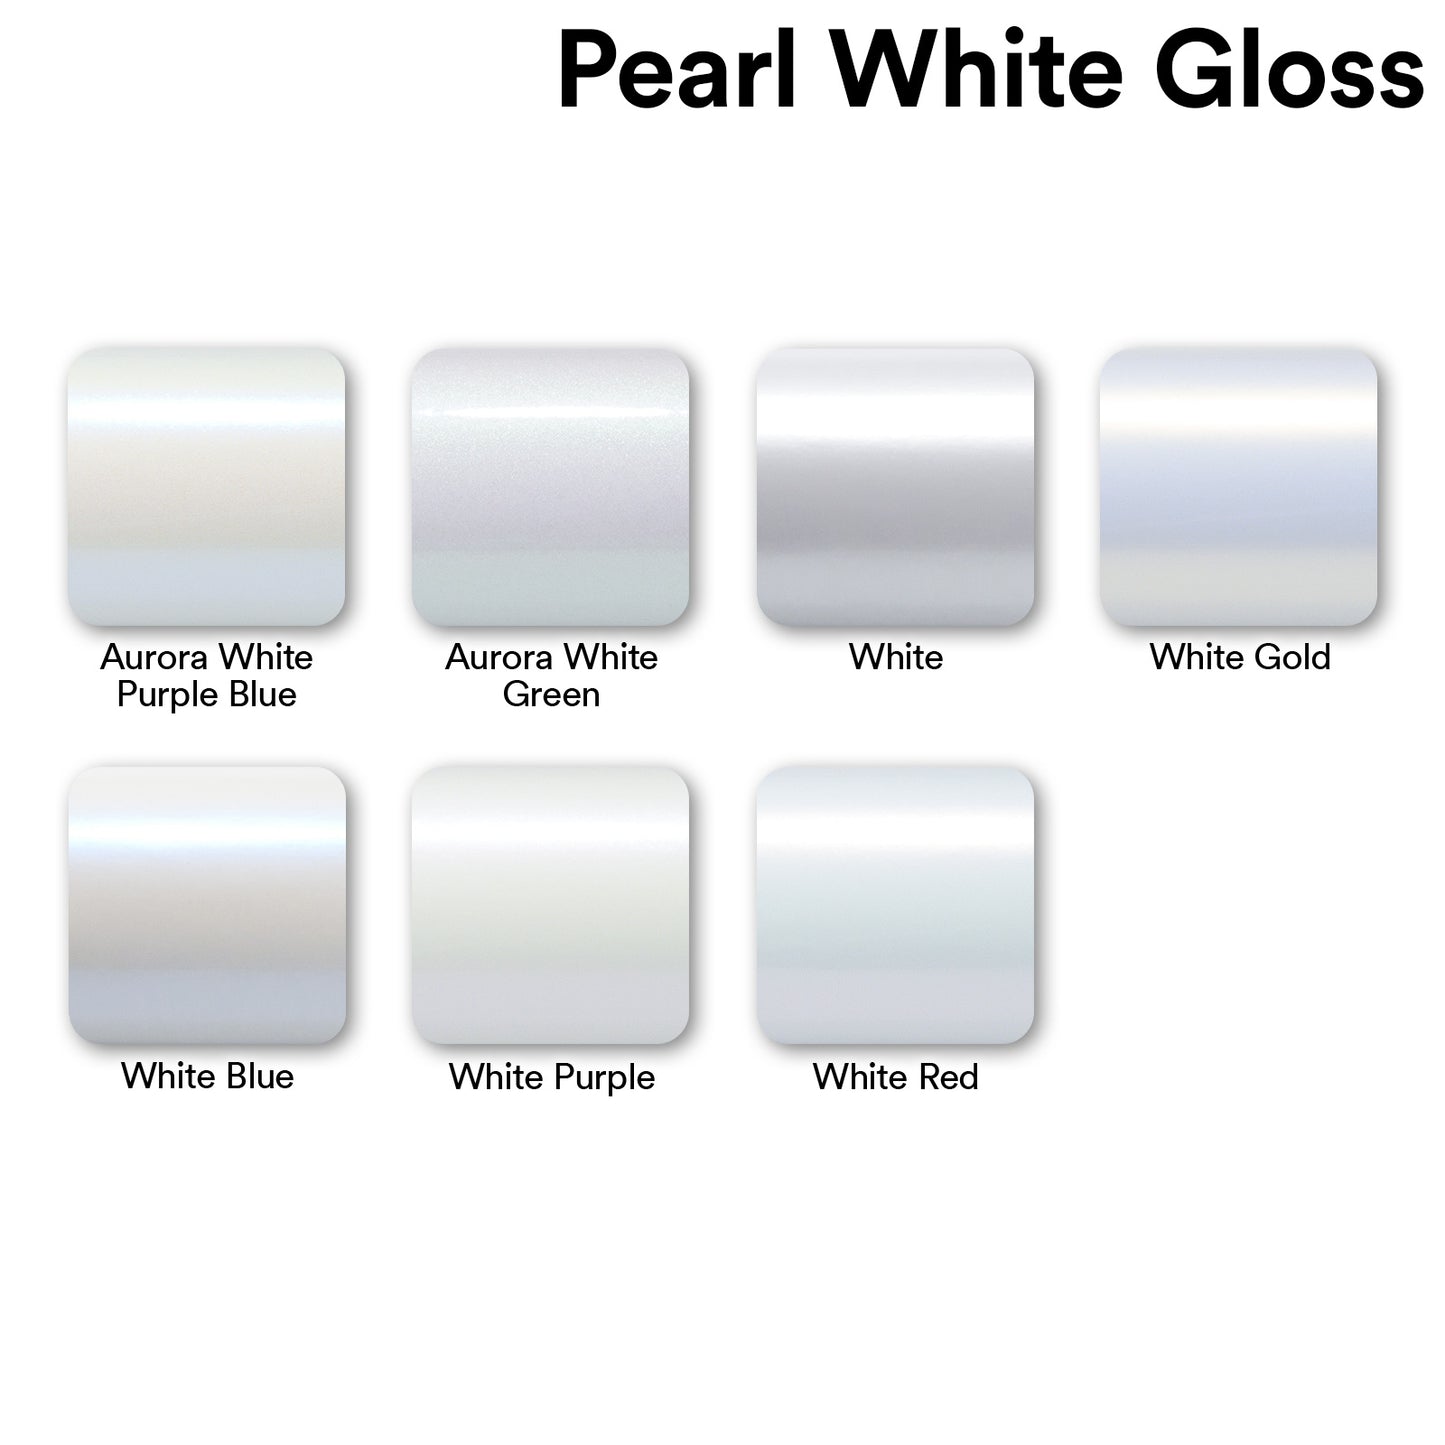 Gloss Pearl White to Gold Vinyl Wrap